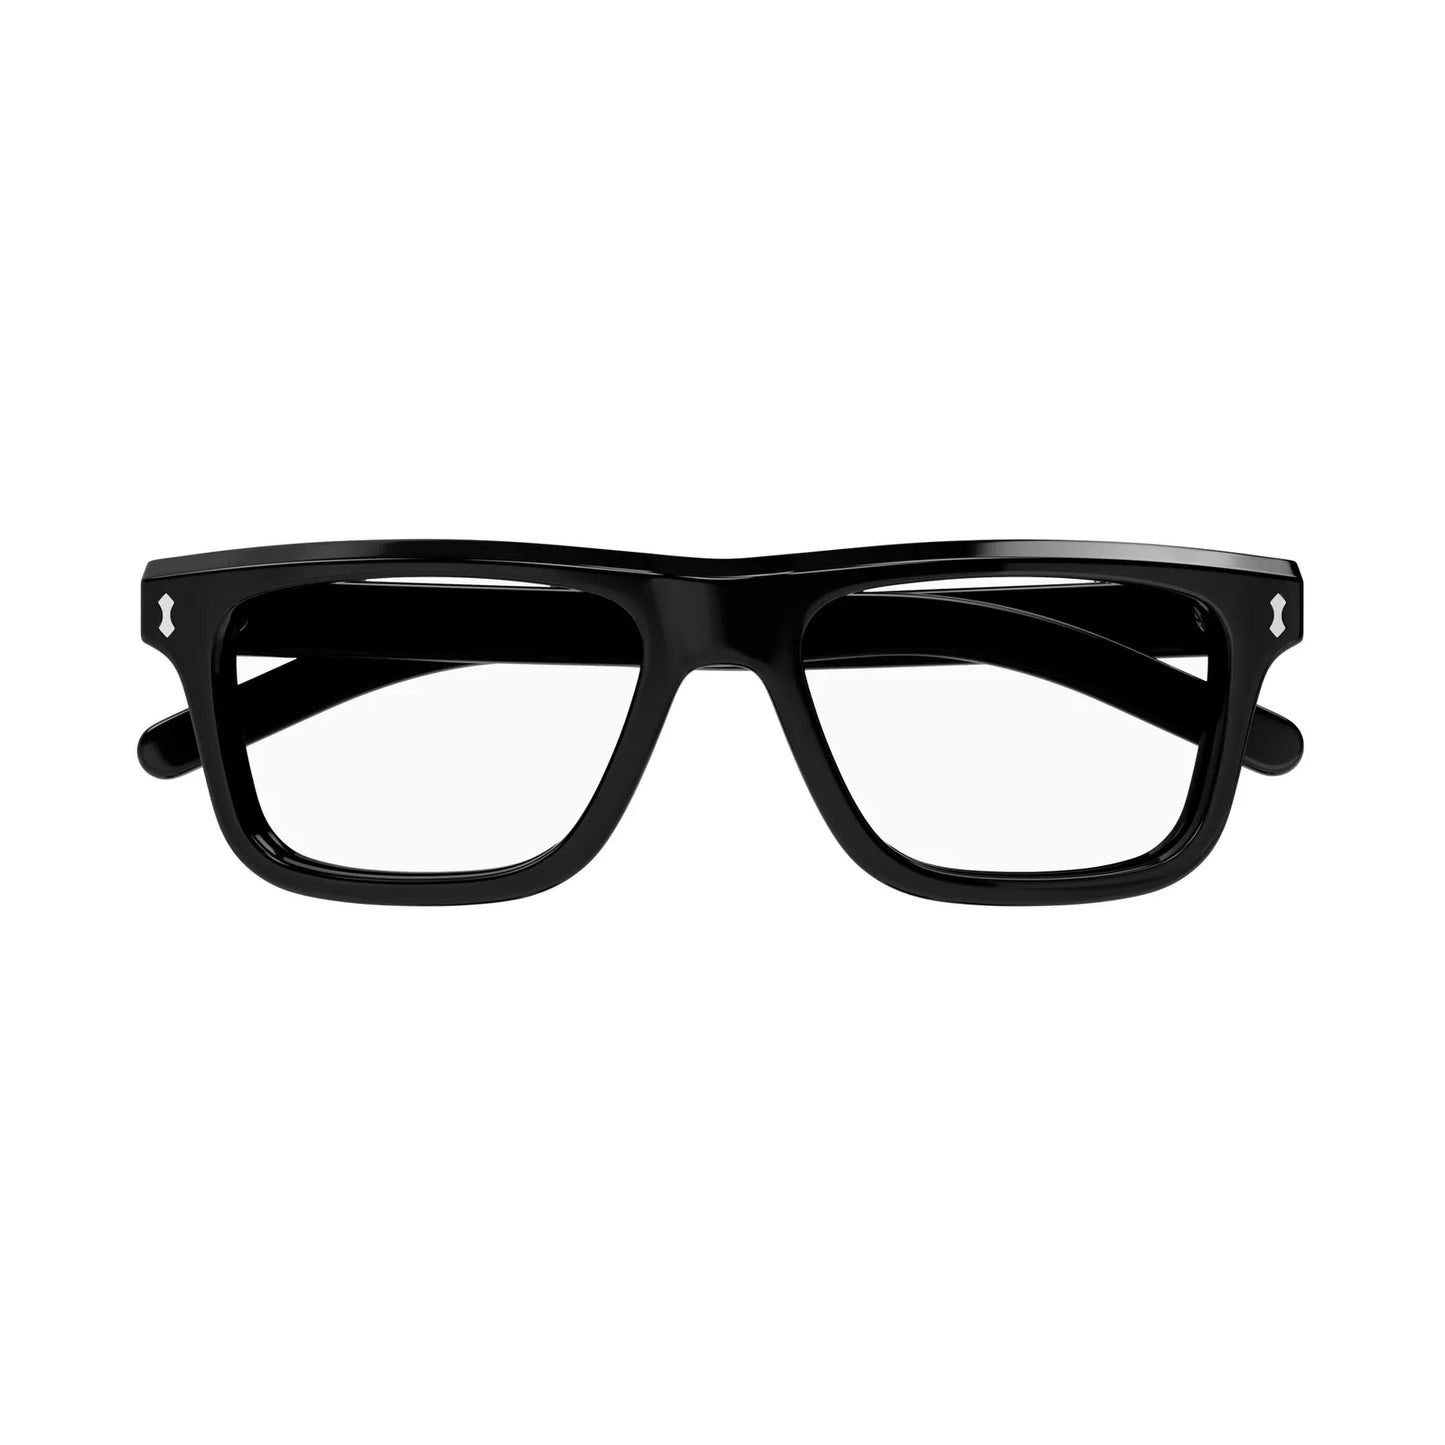 Gucci GG1525O-001-54  New Eyeglasses